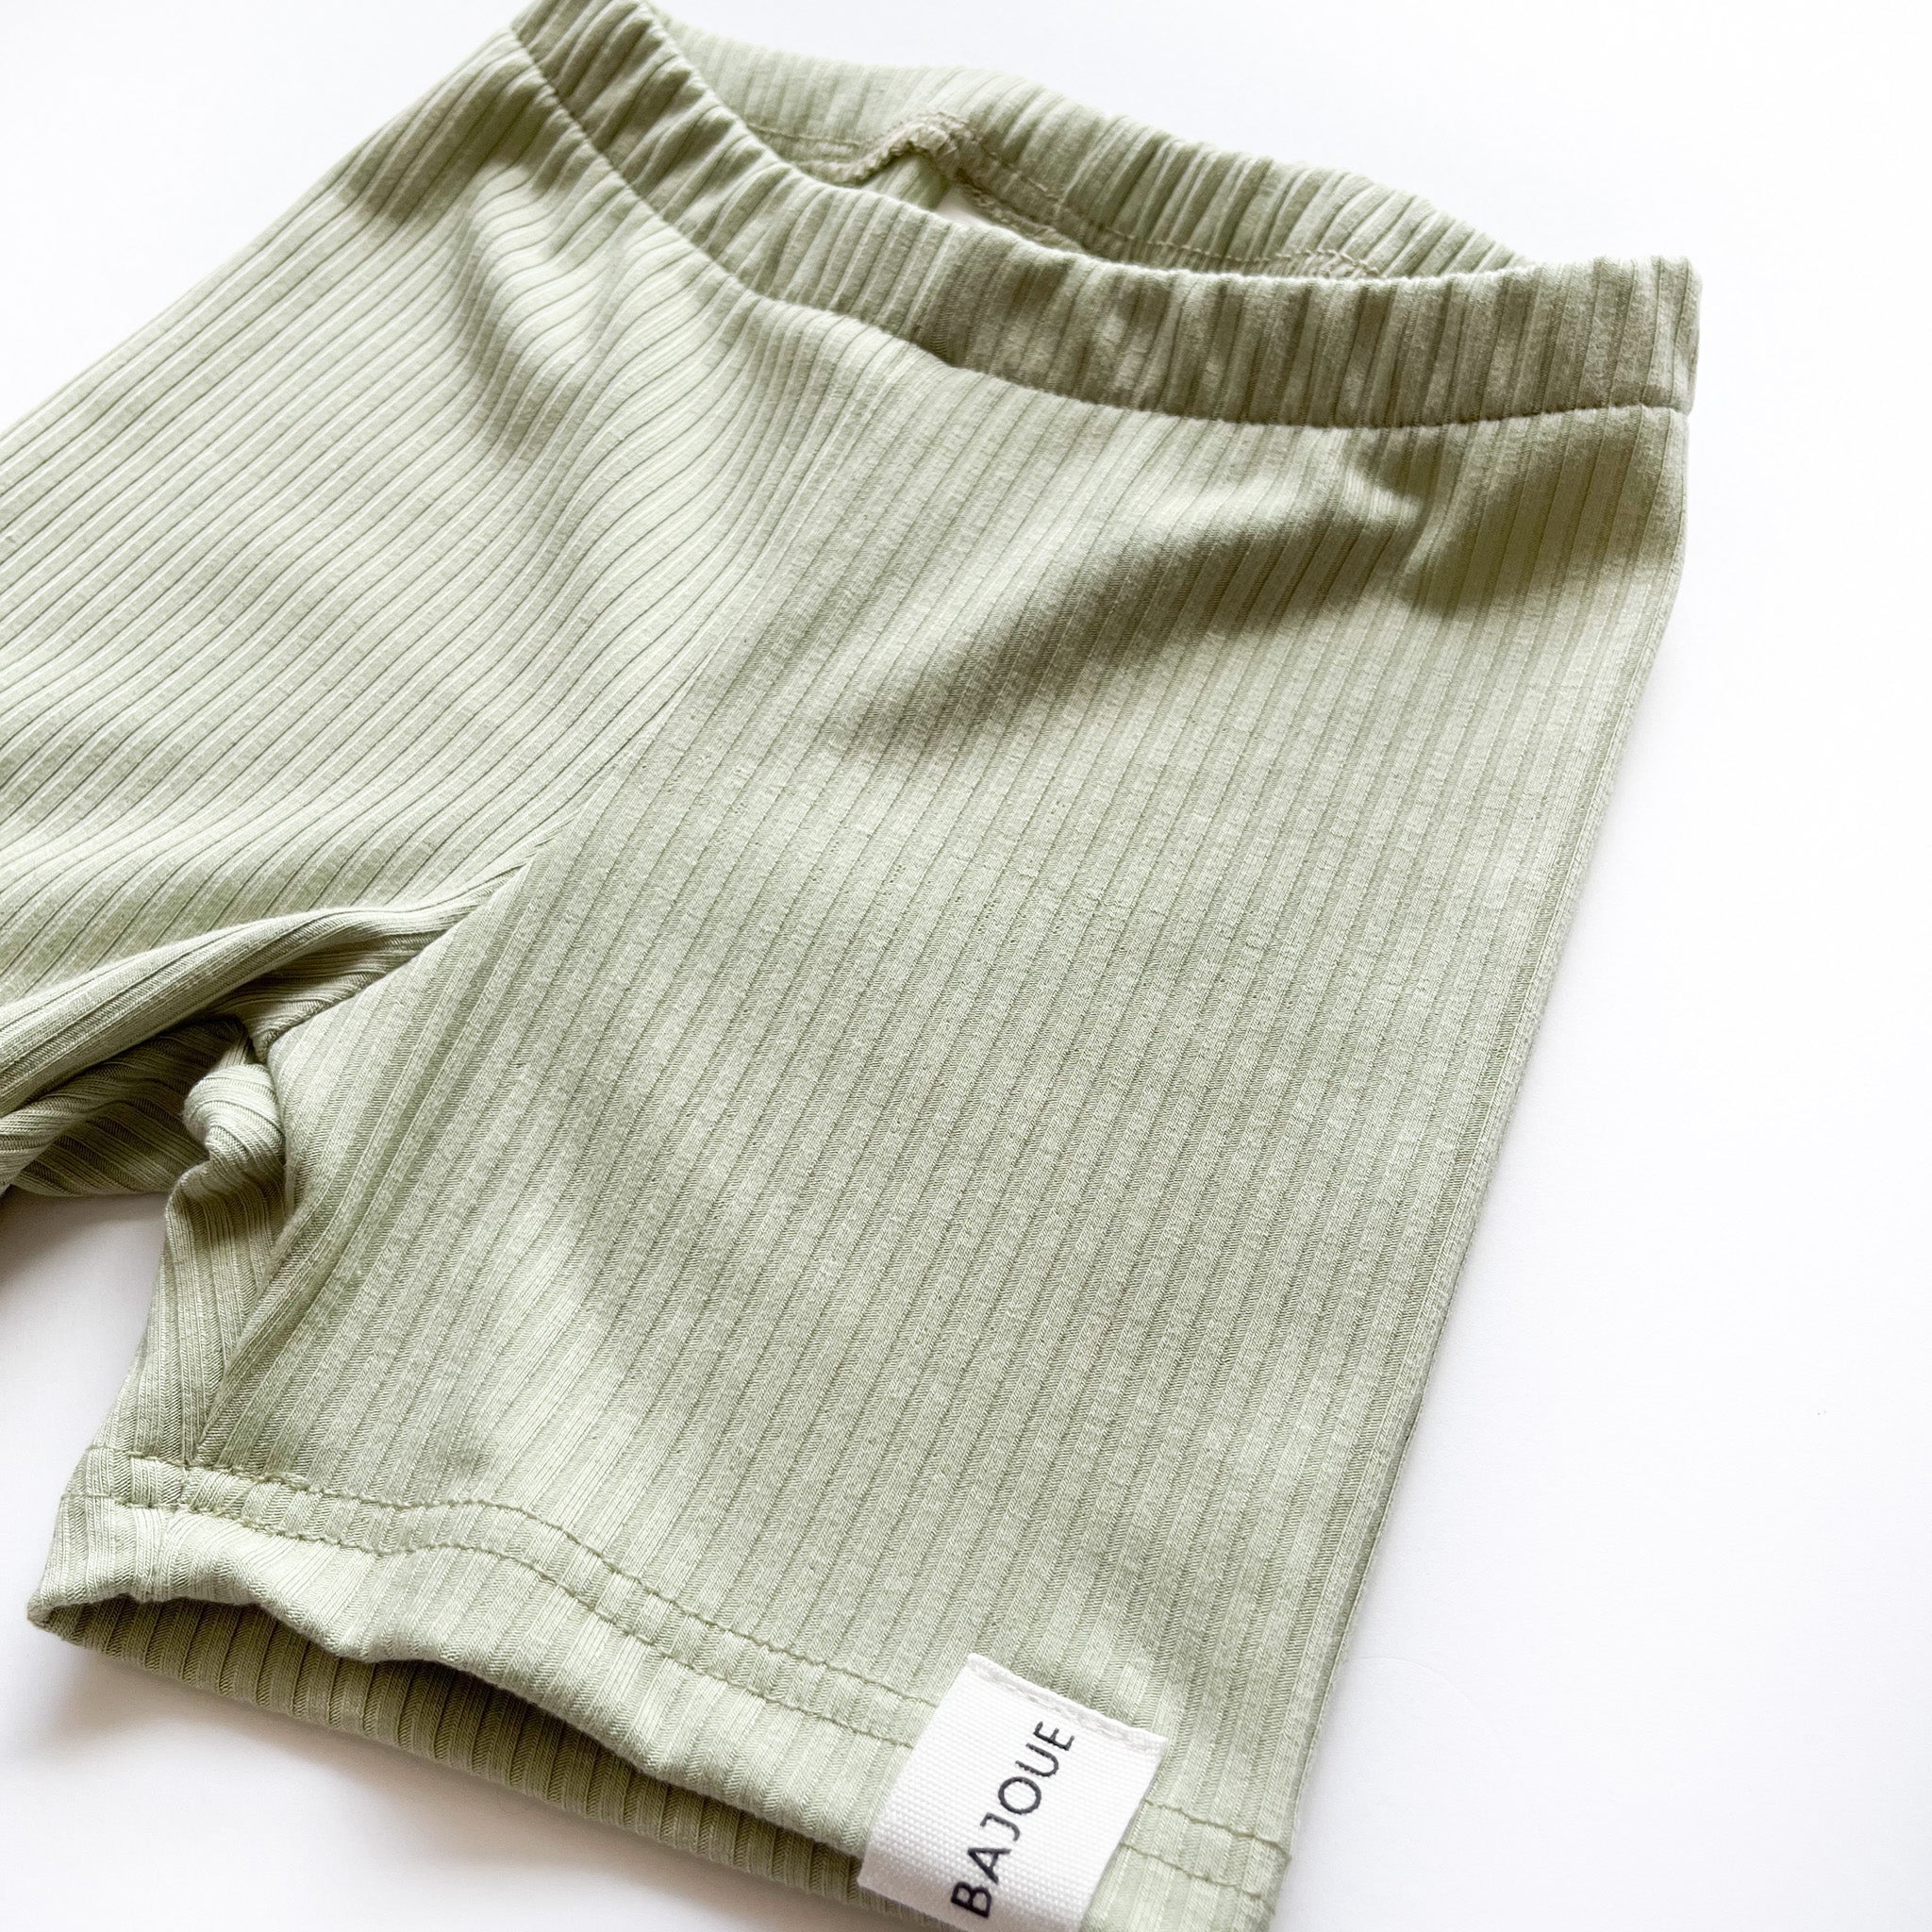 Unisex bamboo shorts - Margarita